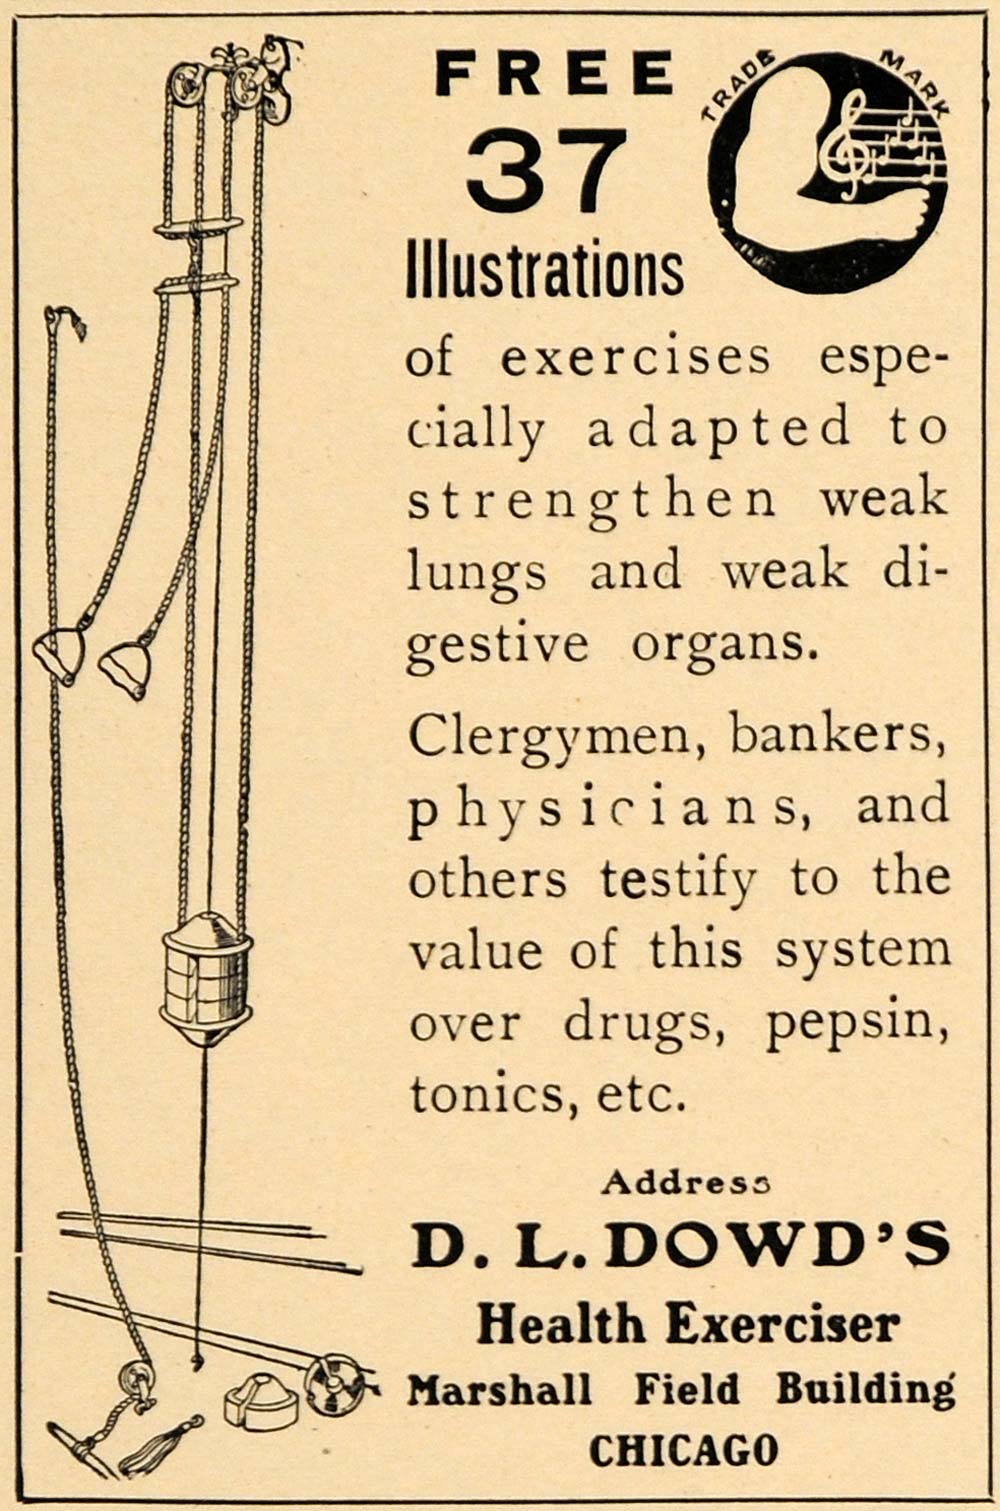 1905 Ad D L Dowd's Health Exerciser Machine Chicago - ORIGINAL ADVERTISING GUN1